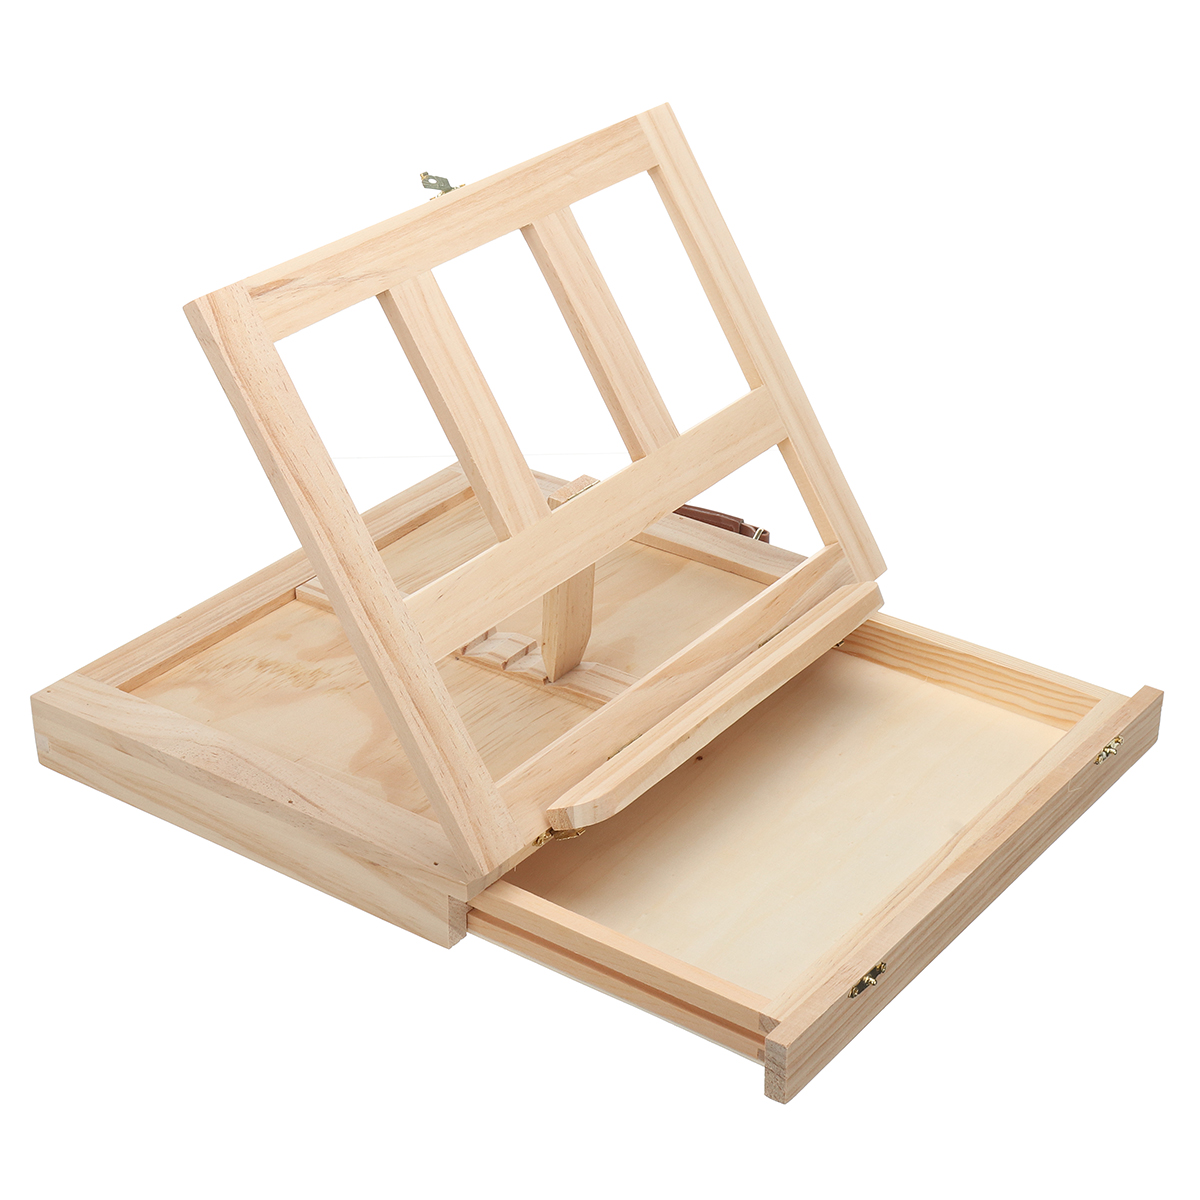 Artist Table Easel Art Drawing Painting Wood Sketching Box Board Desktop Home 6